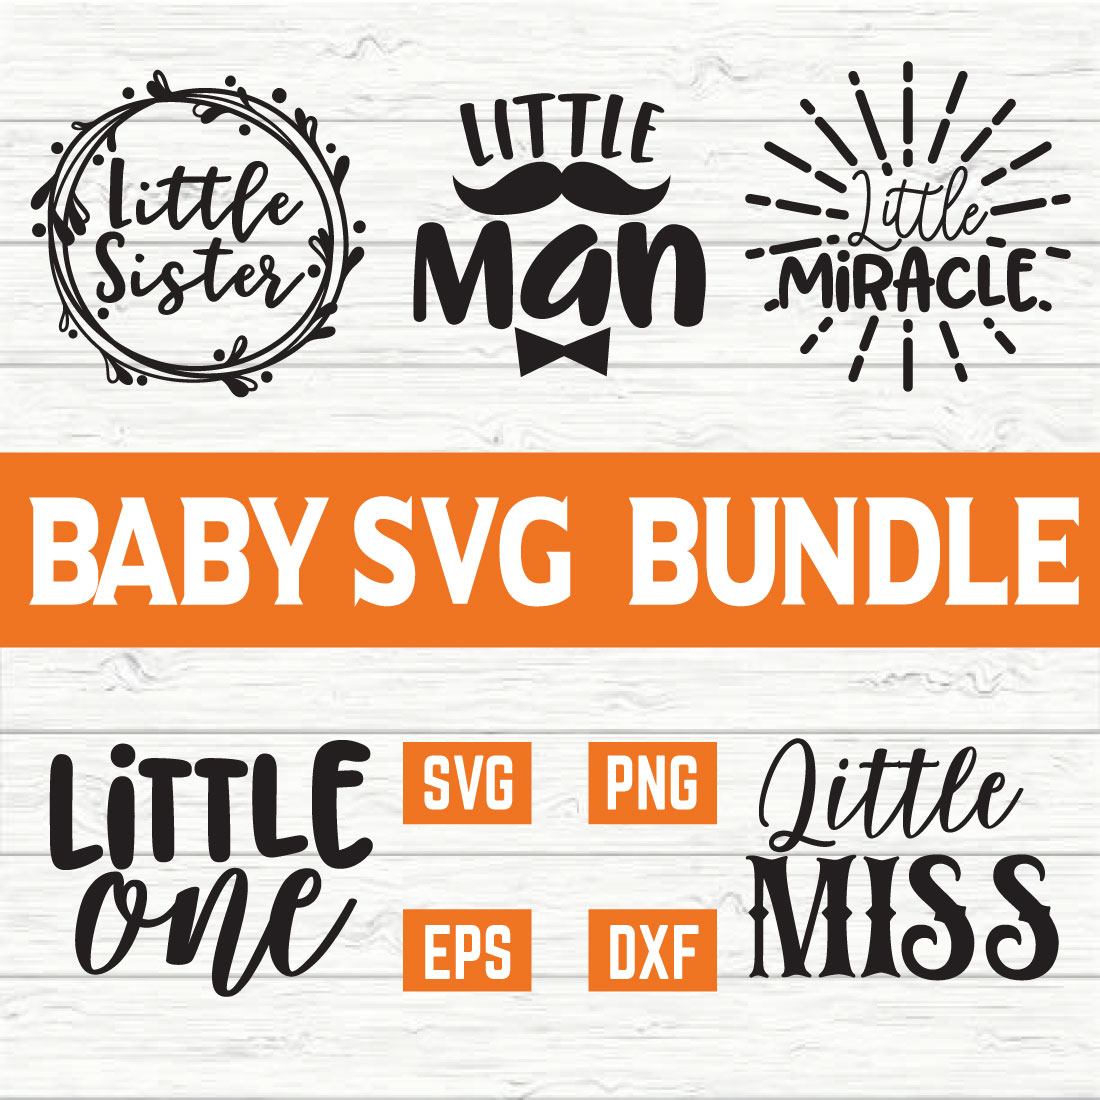 Baby Typography Design Bundle vol 6 preview image.